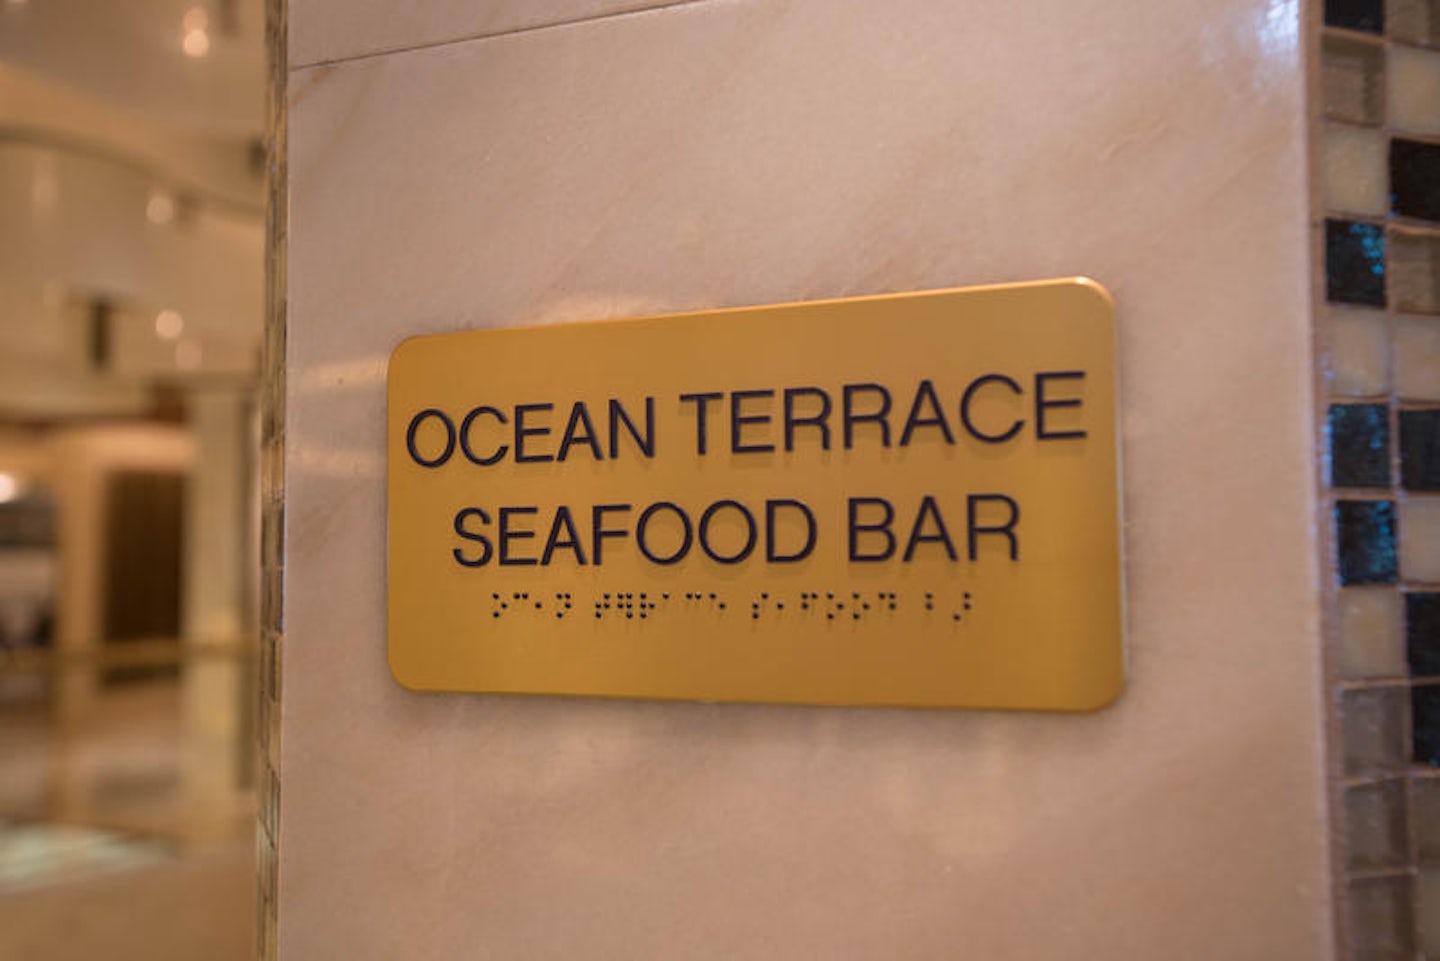 Ocean Terrace Seafood Bar on Regal Princess